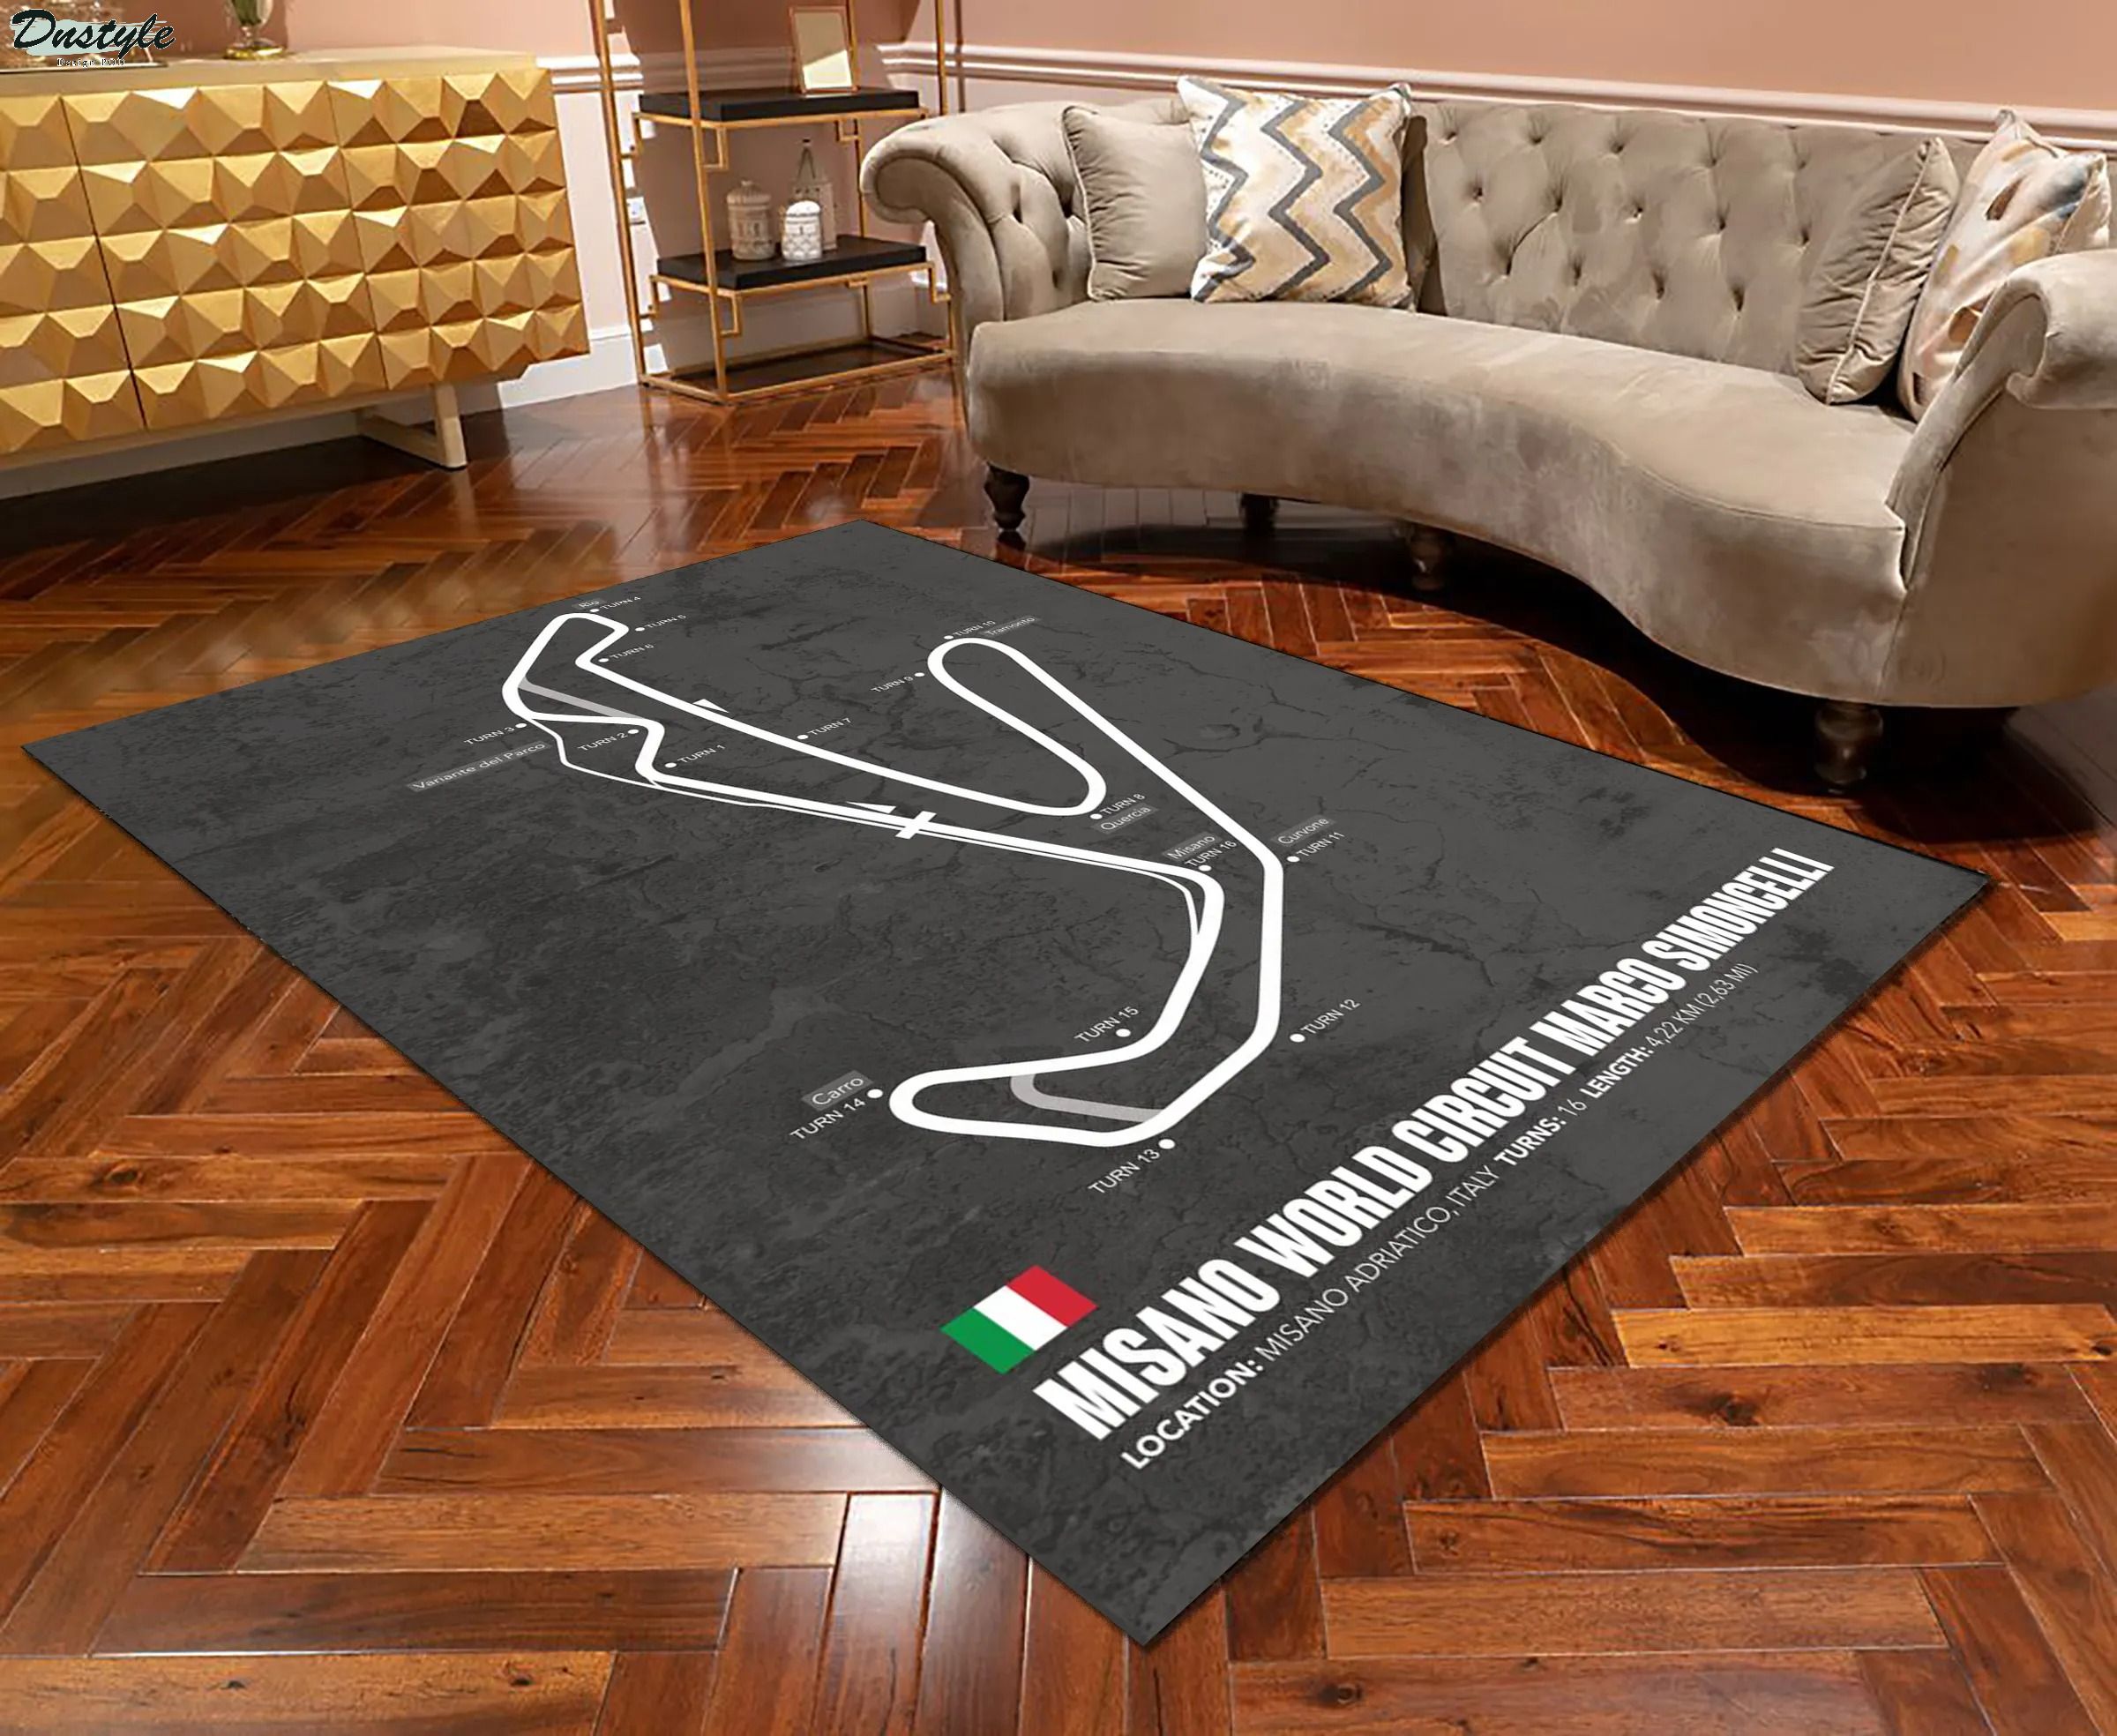 Misano world circuit marco simoncelli f1 track rug 1